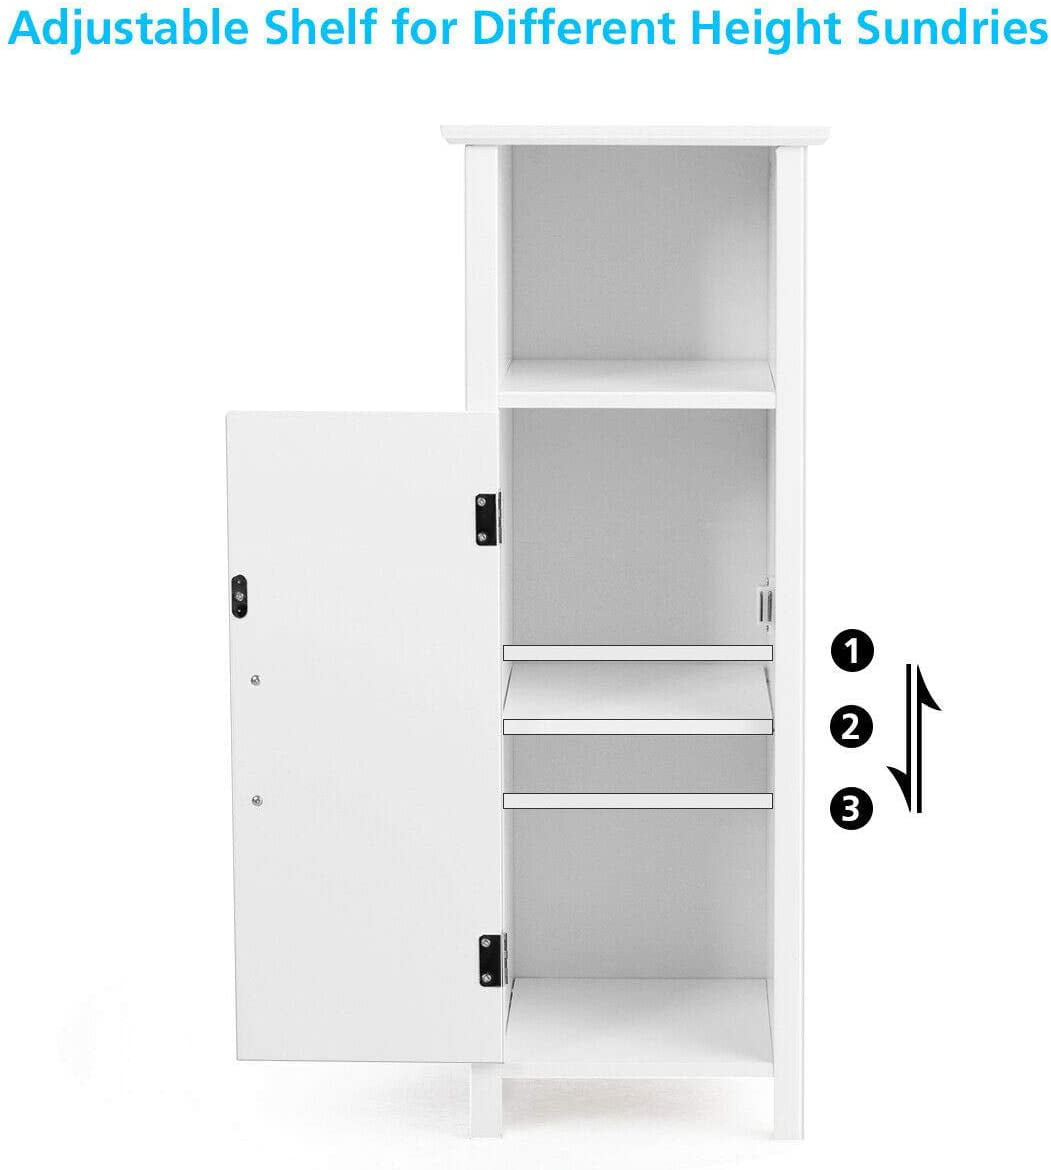 31.90 High Bathroom Storage Cabinet, White Floor Cabinet with 3